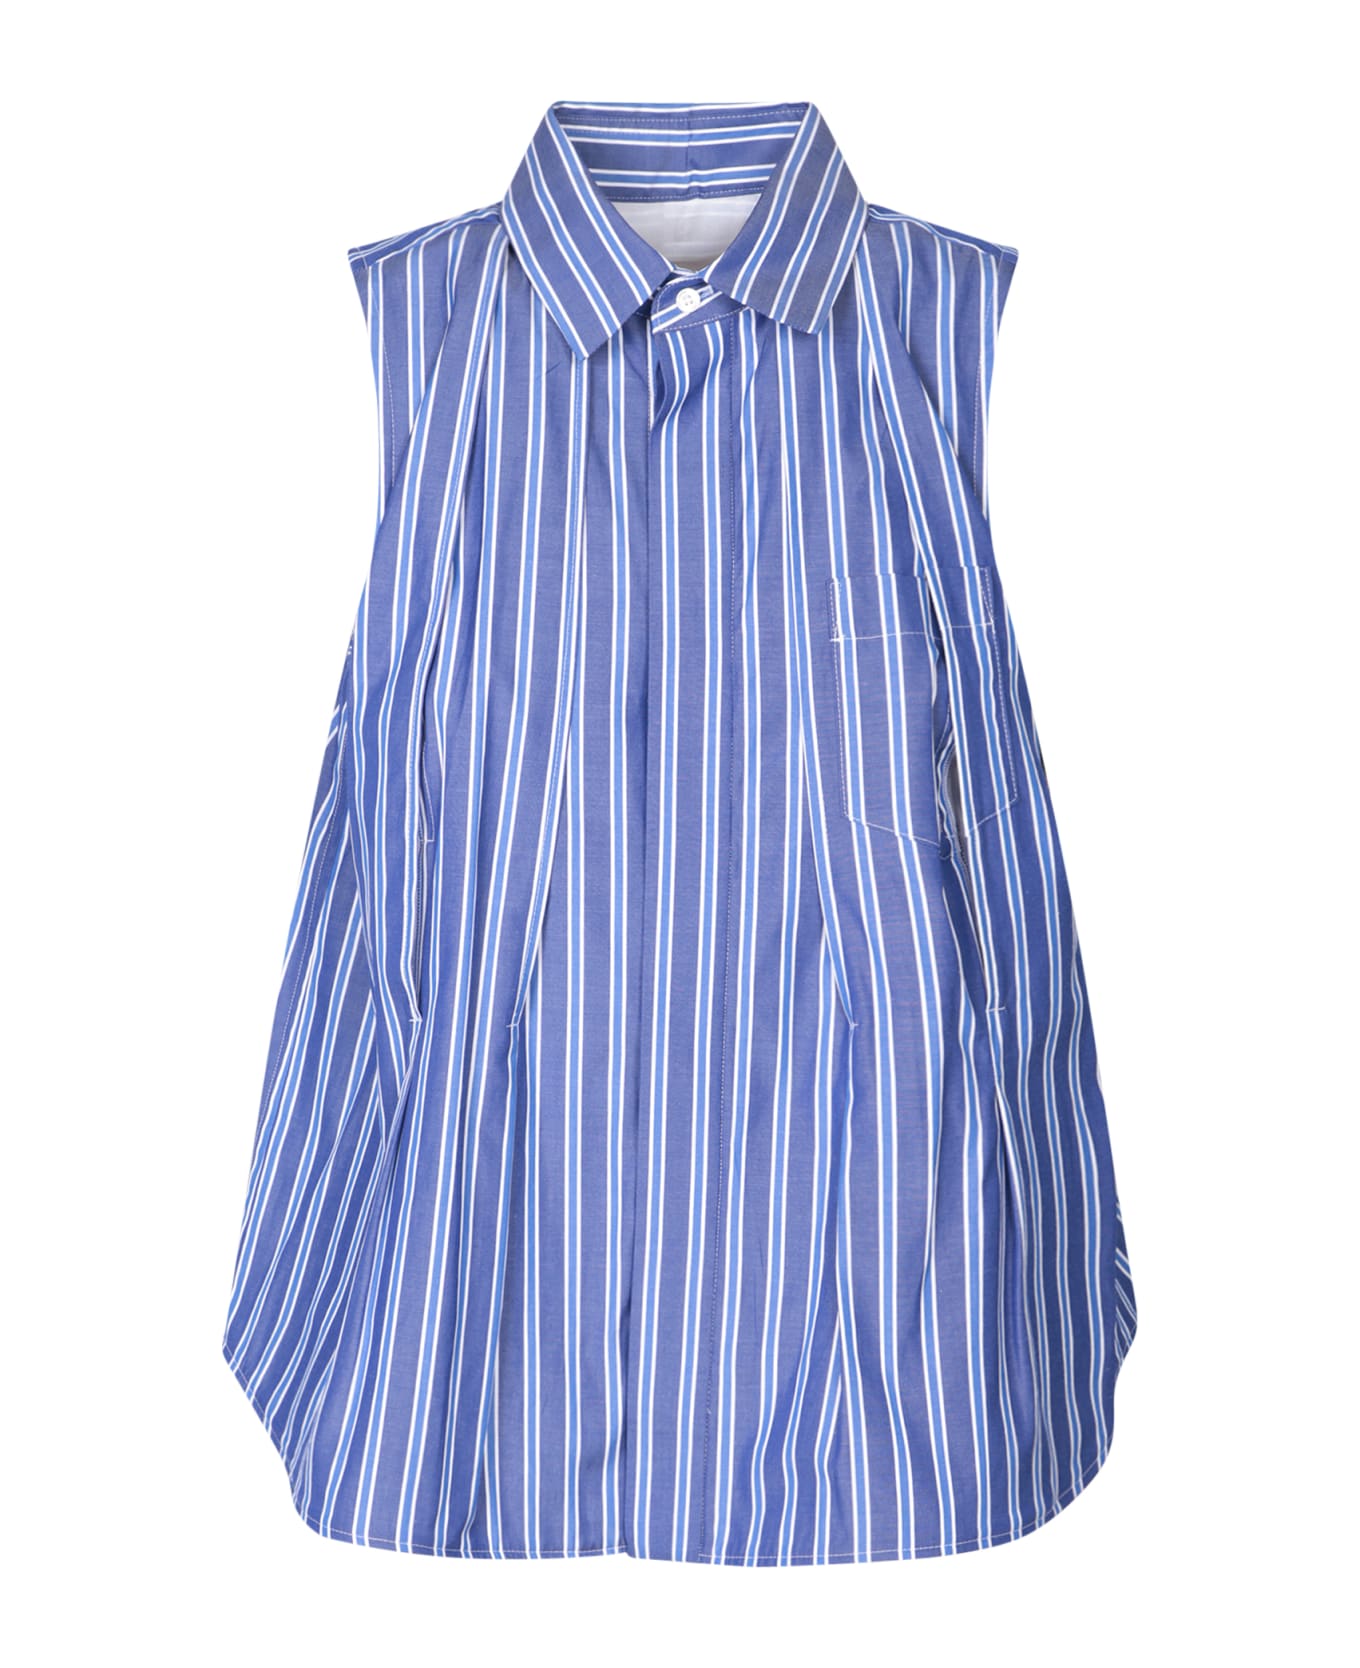 Sacai Sleeveless Shirt In White And Light Blue Stripes - Multi